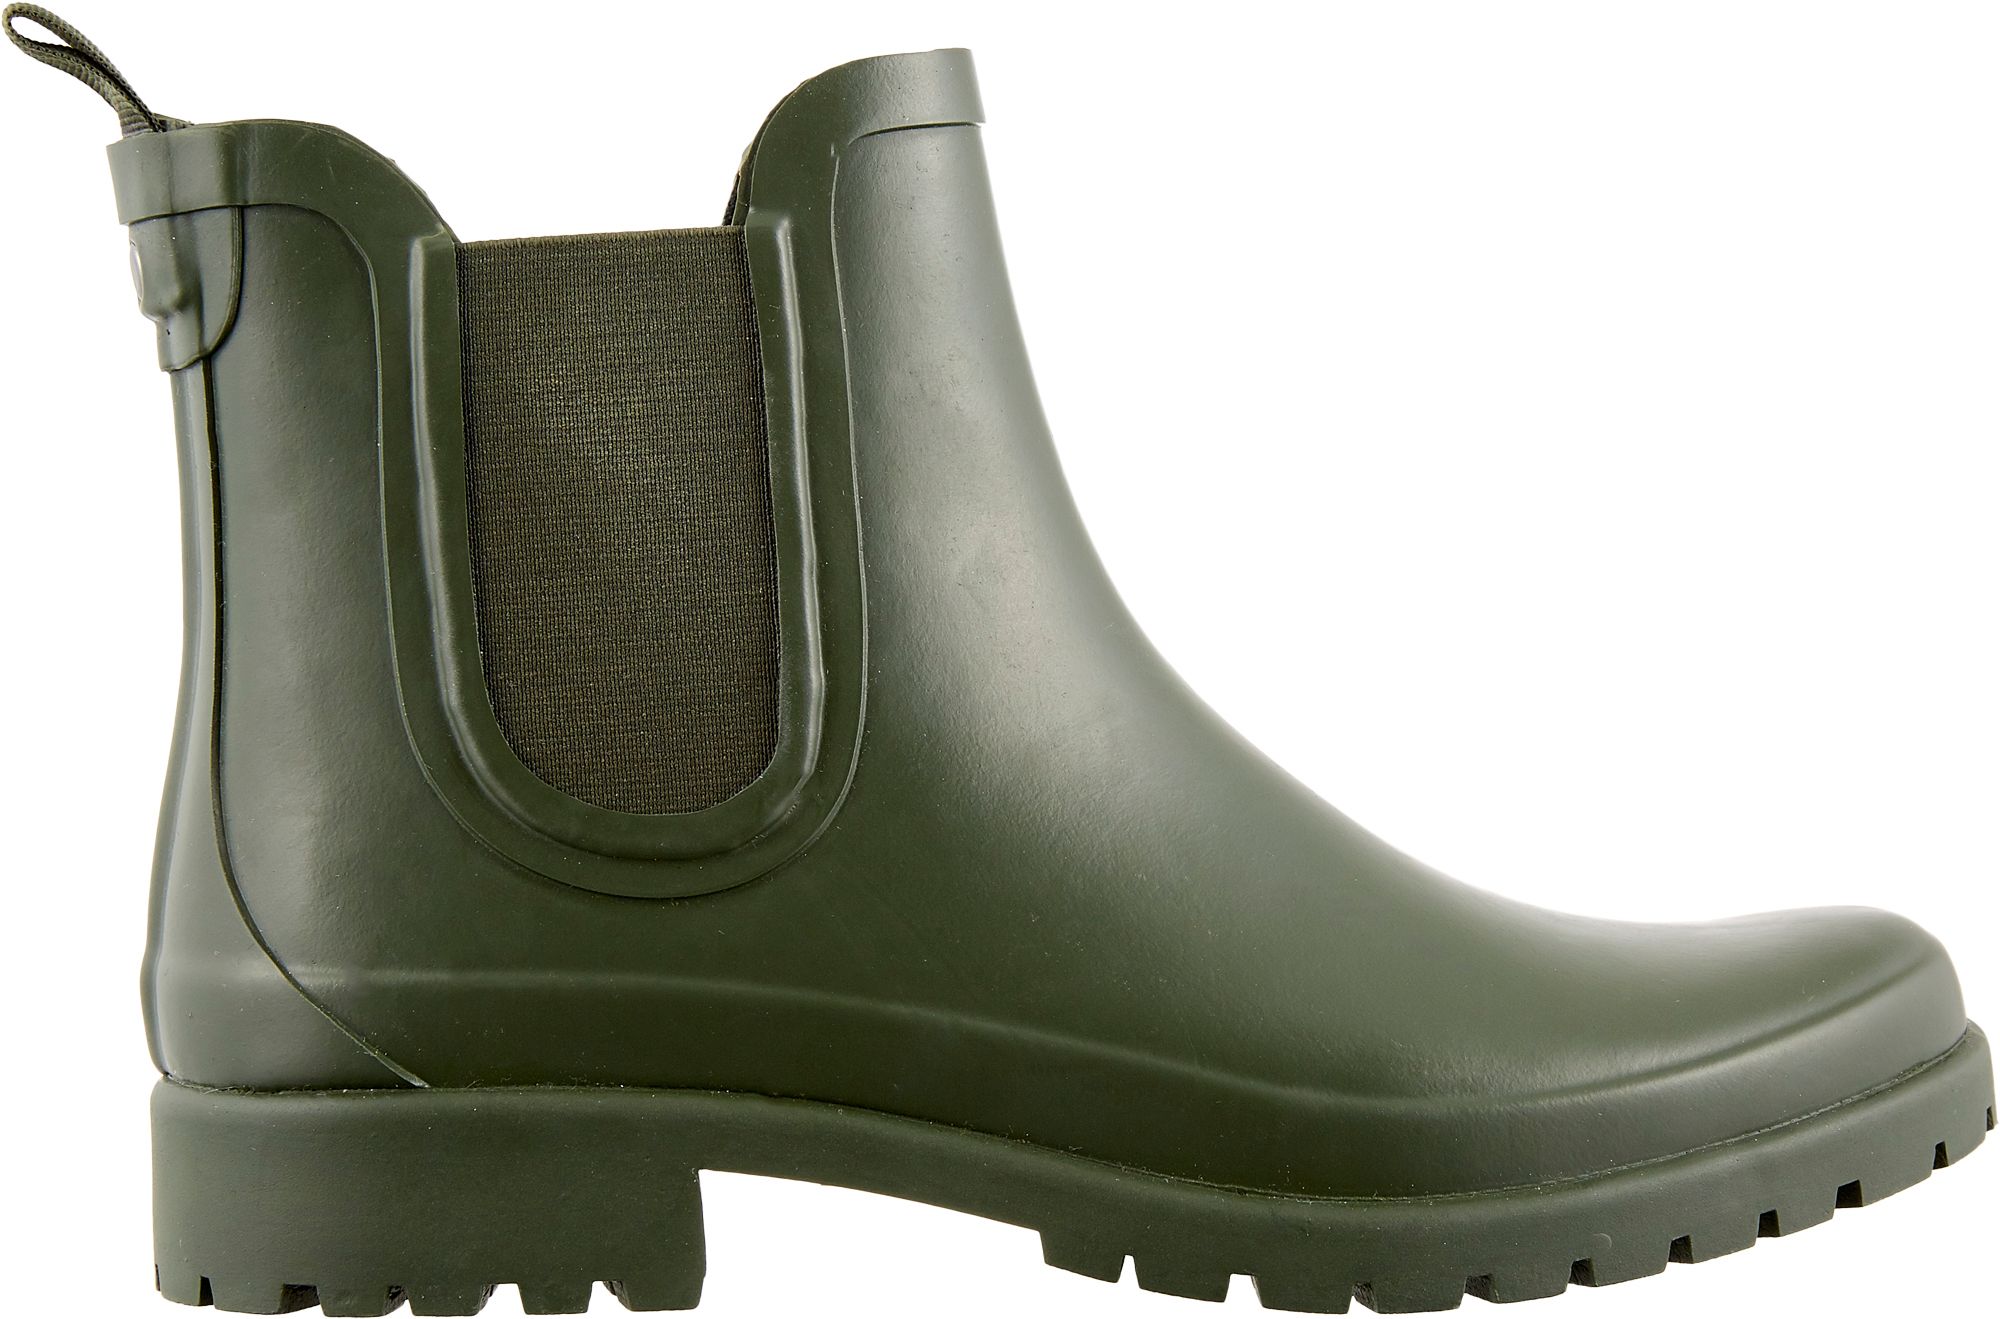 ankle chelsea rain boots